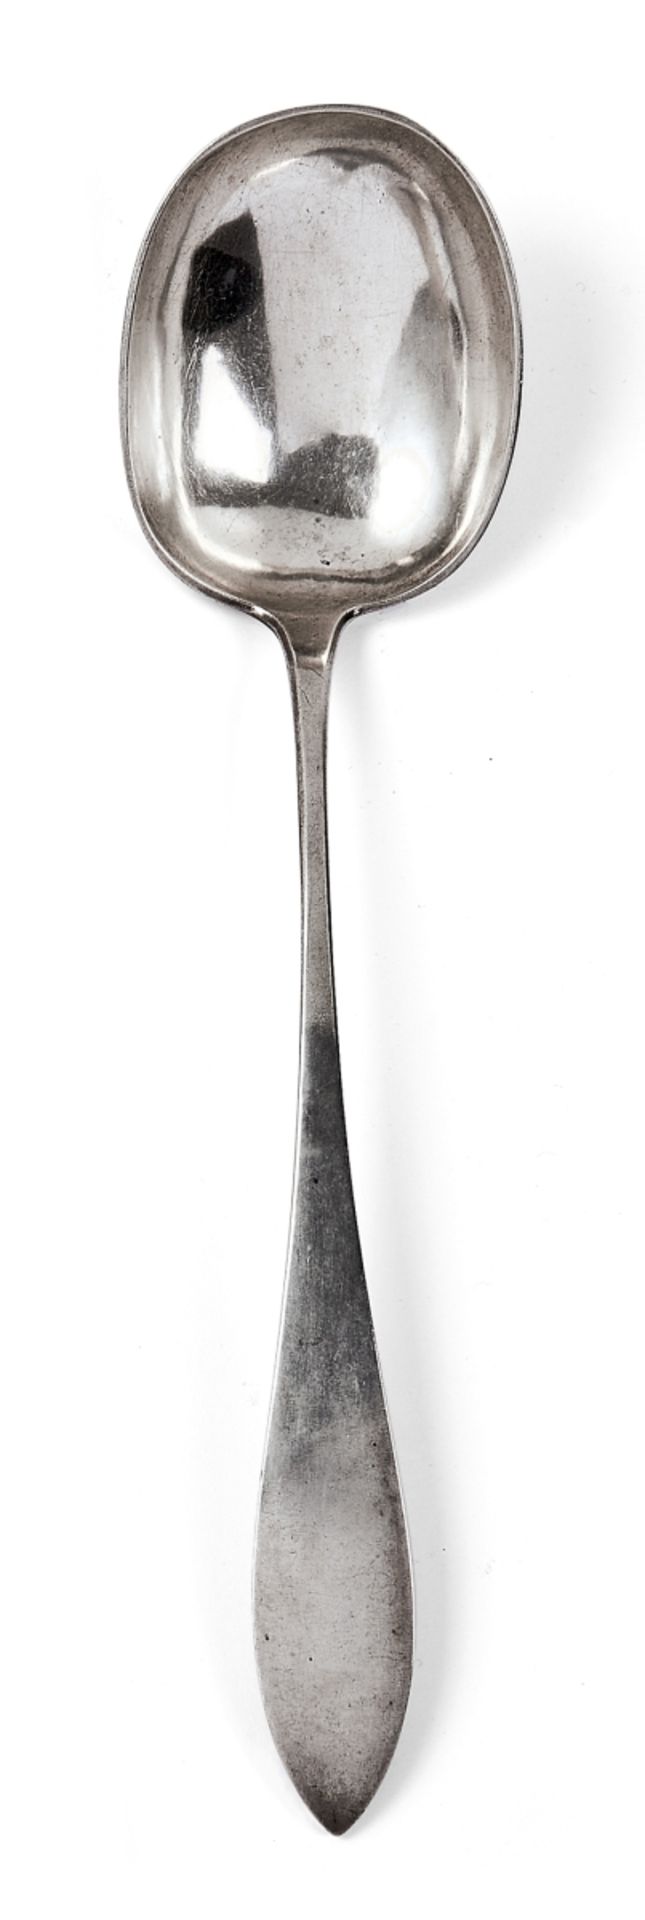 Biedermeier-Kloßlöffel1. H. 19. Jh.Ovale Laffe mit spitz auslaufendem Griff. Silber. Rückseitig